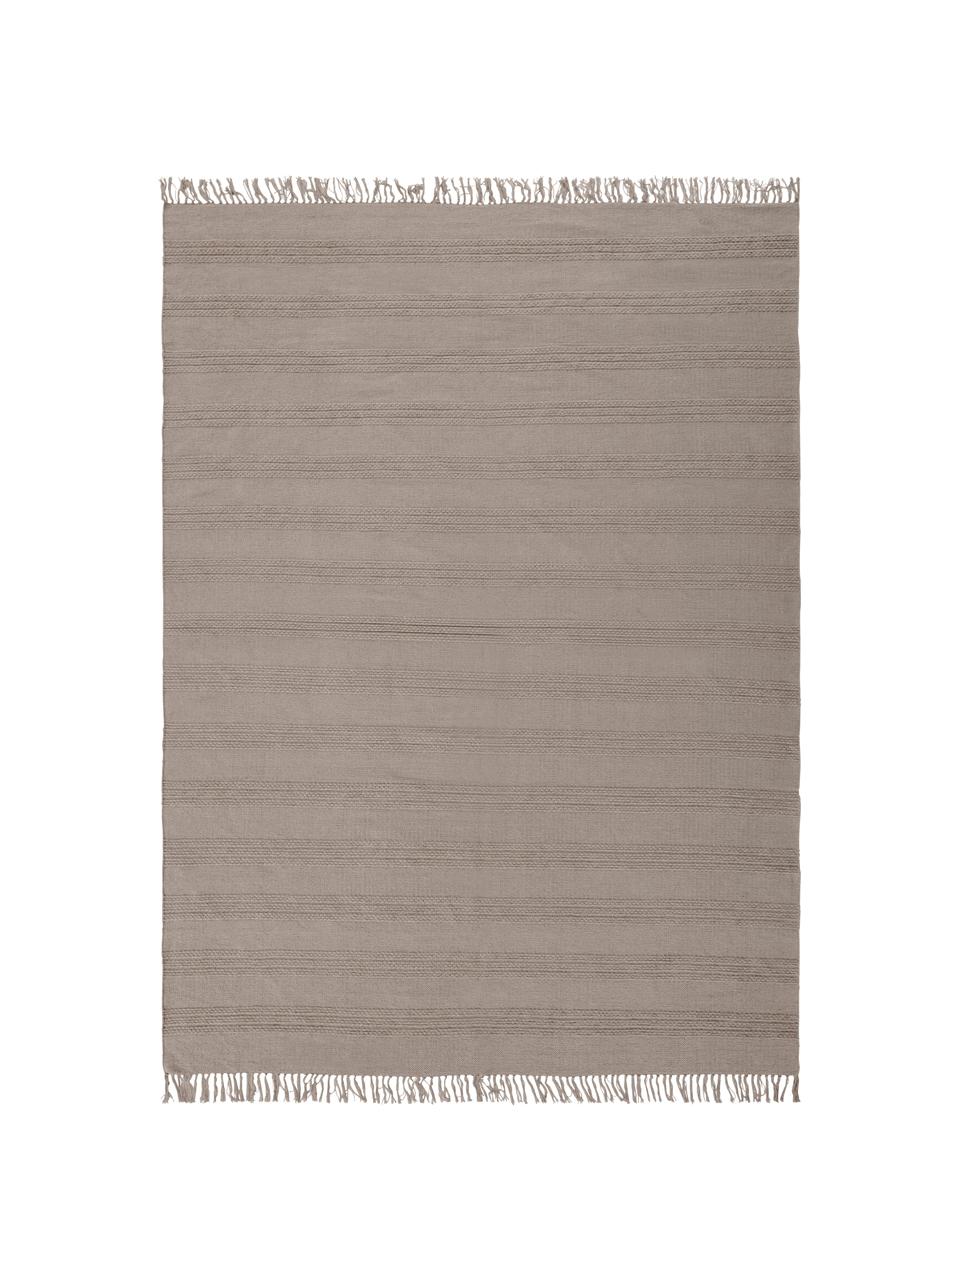 Katoenen vloerkleed Tanya met ton-sur-ton weefpatroon en franjes, 100% katoen, Taupe, B 160 x L 230 cm (maat M)